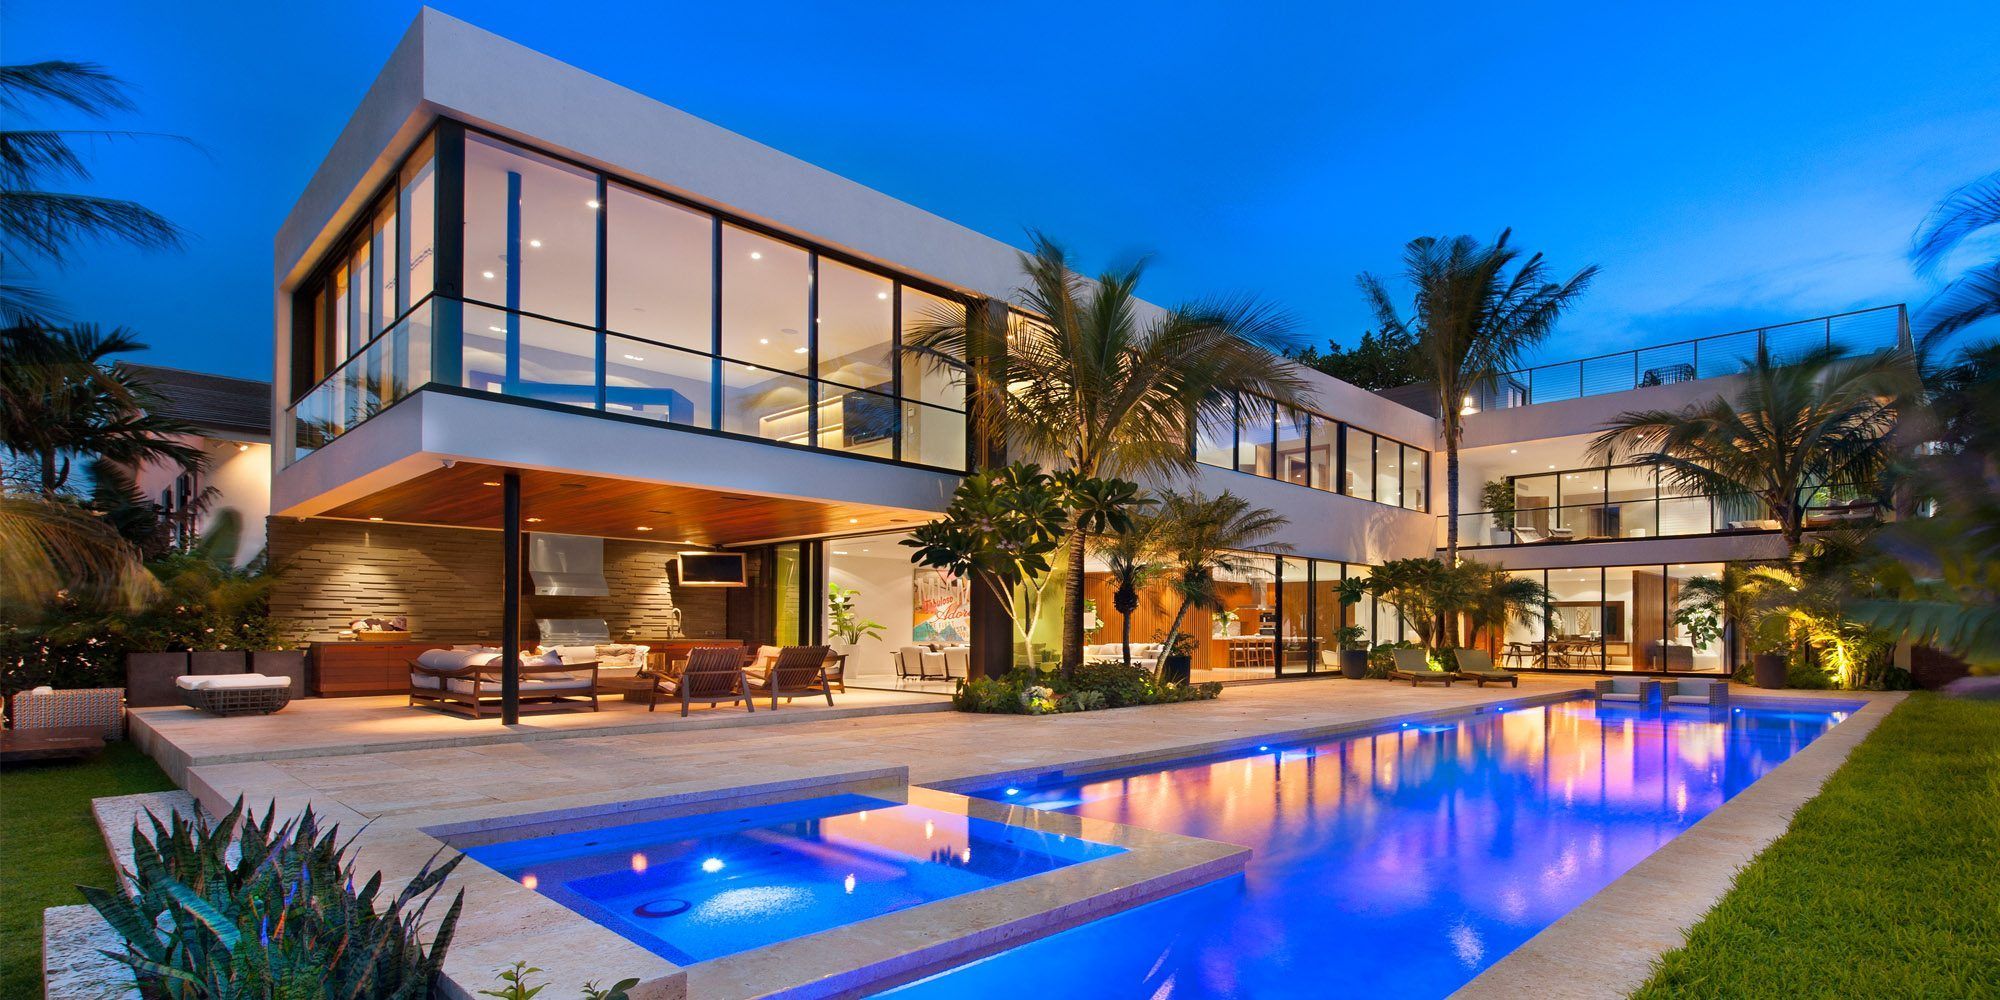 Mansions in Miami & Miami Beach FL | 2021 Luxury Homes